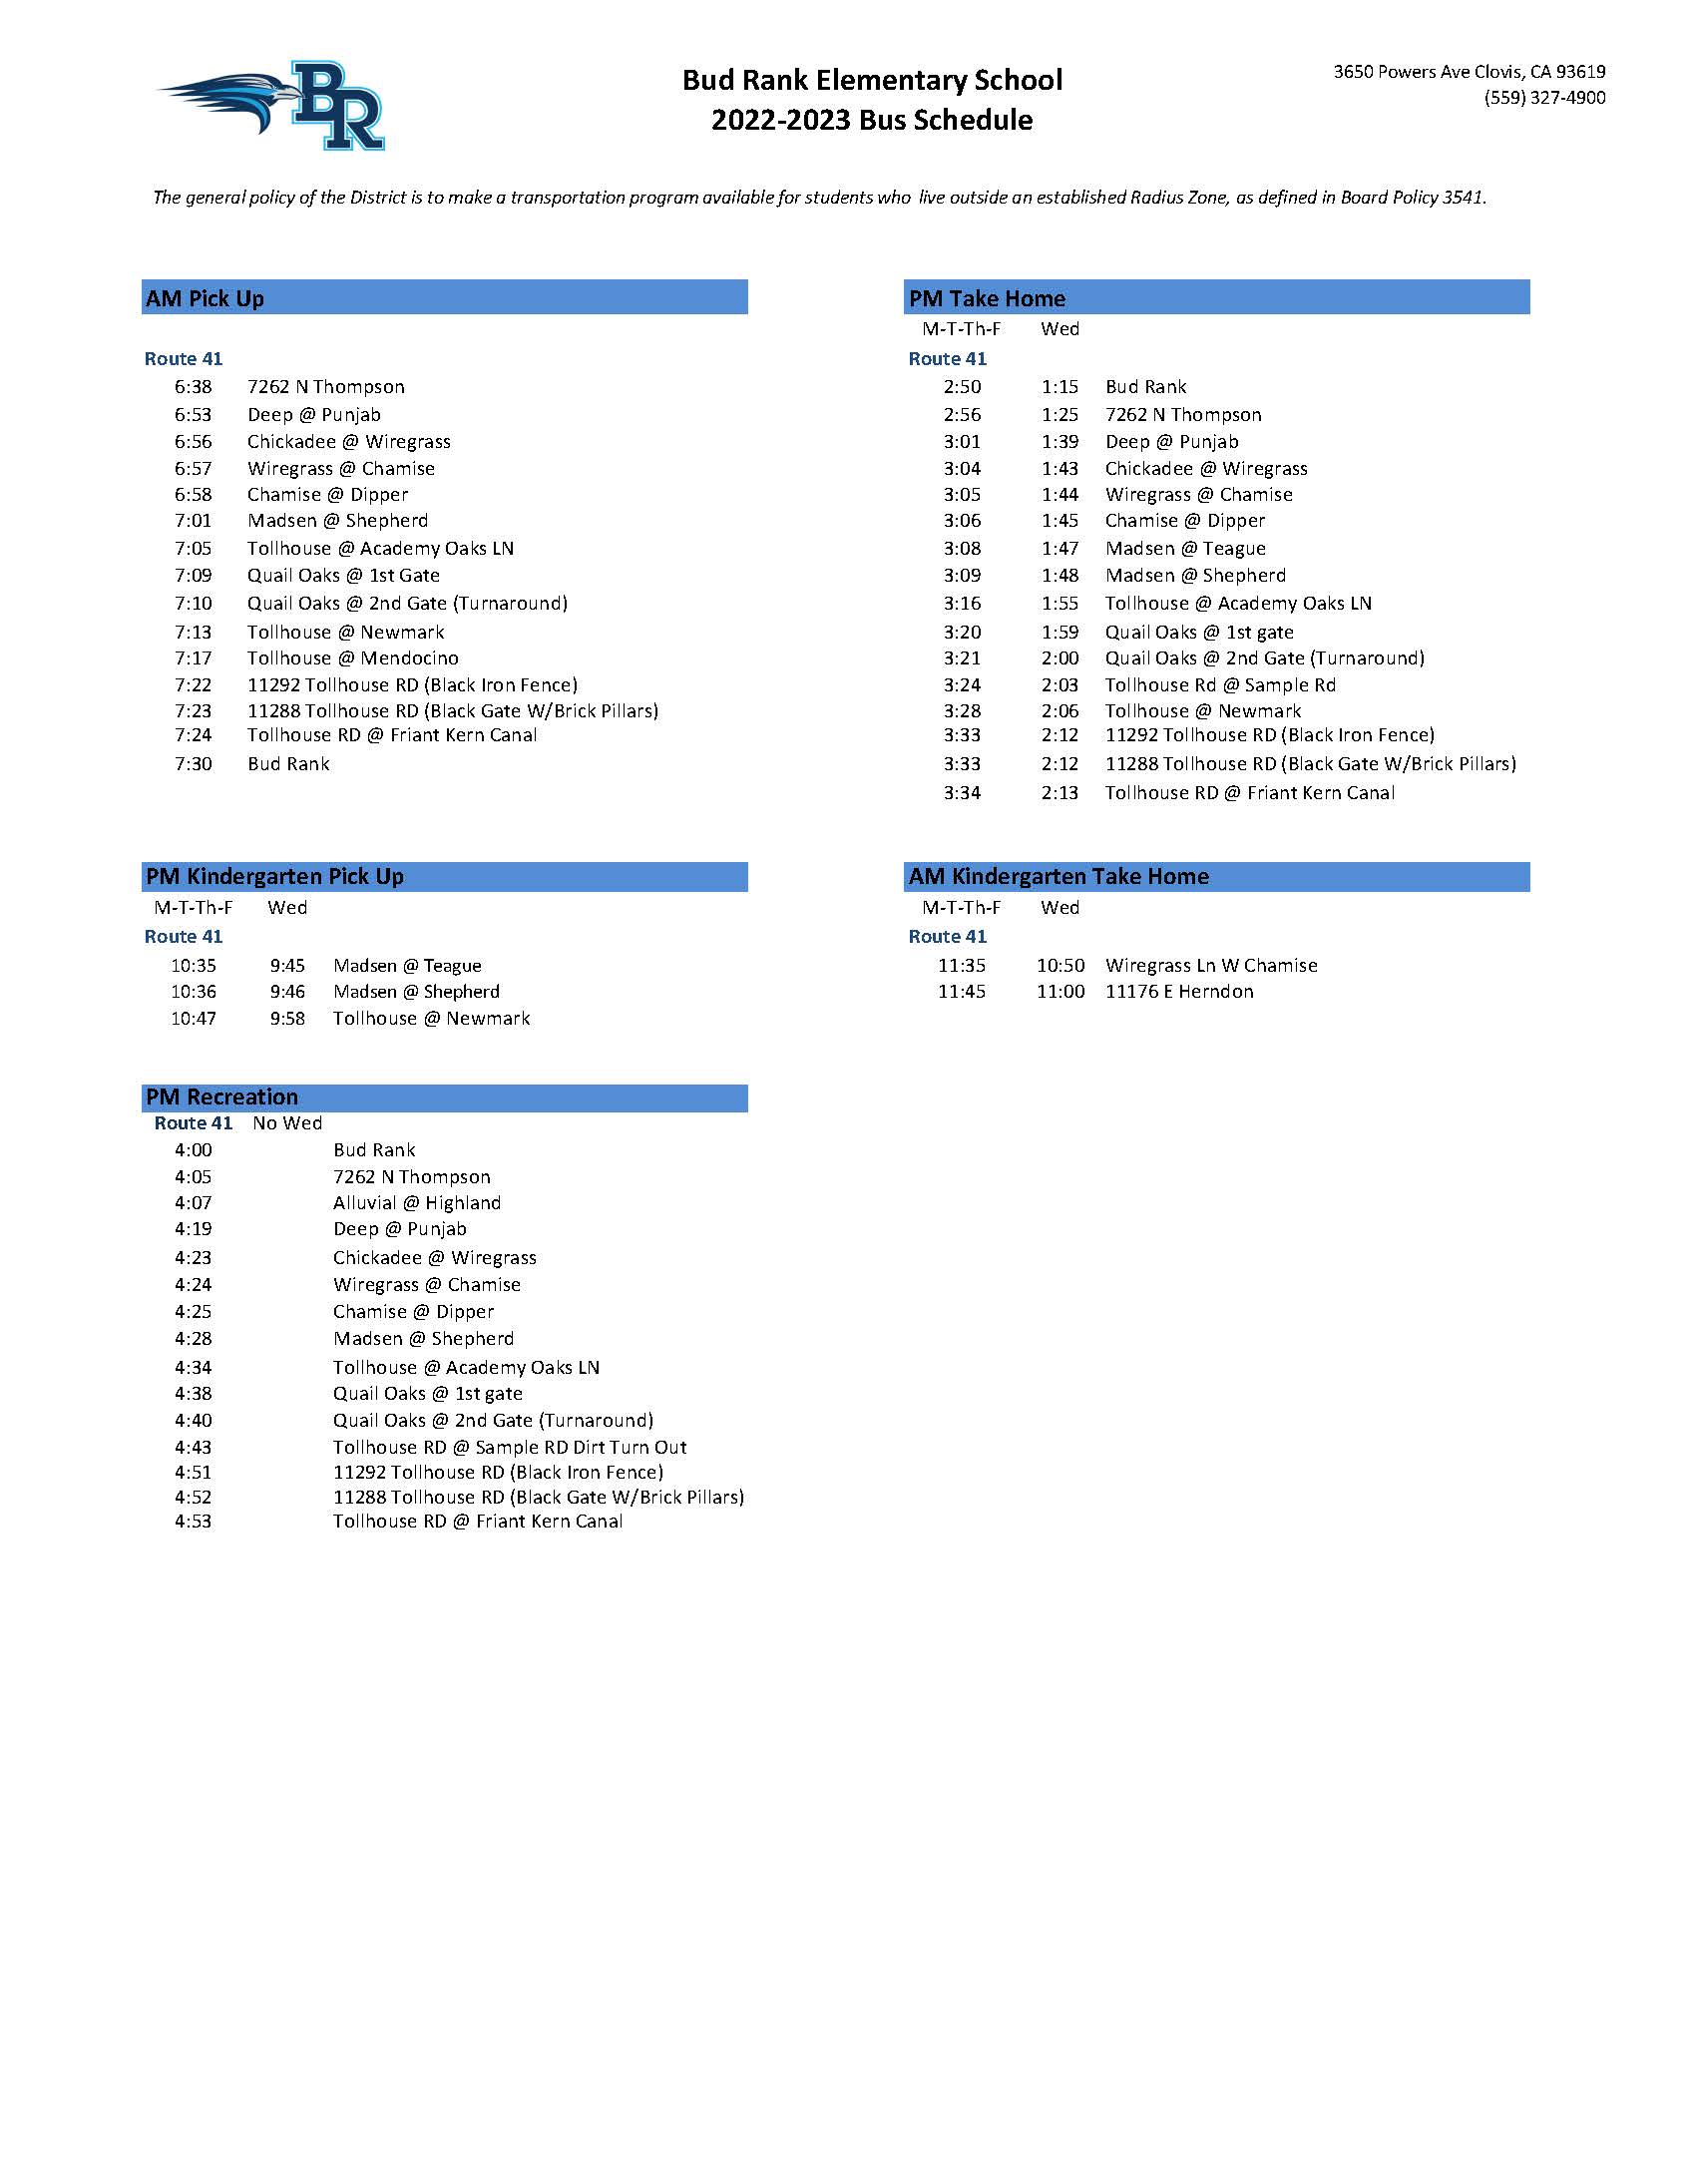 Bus Schedule, pdf below